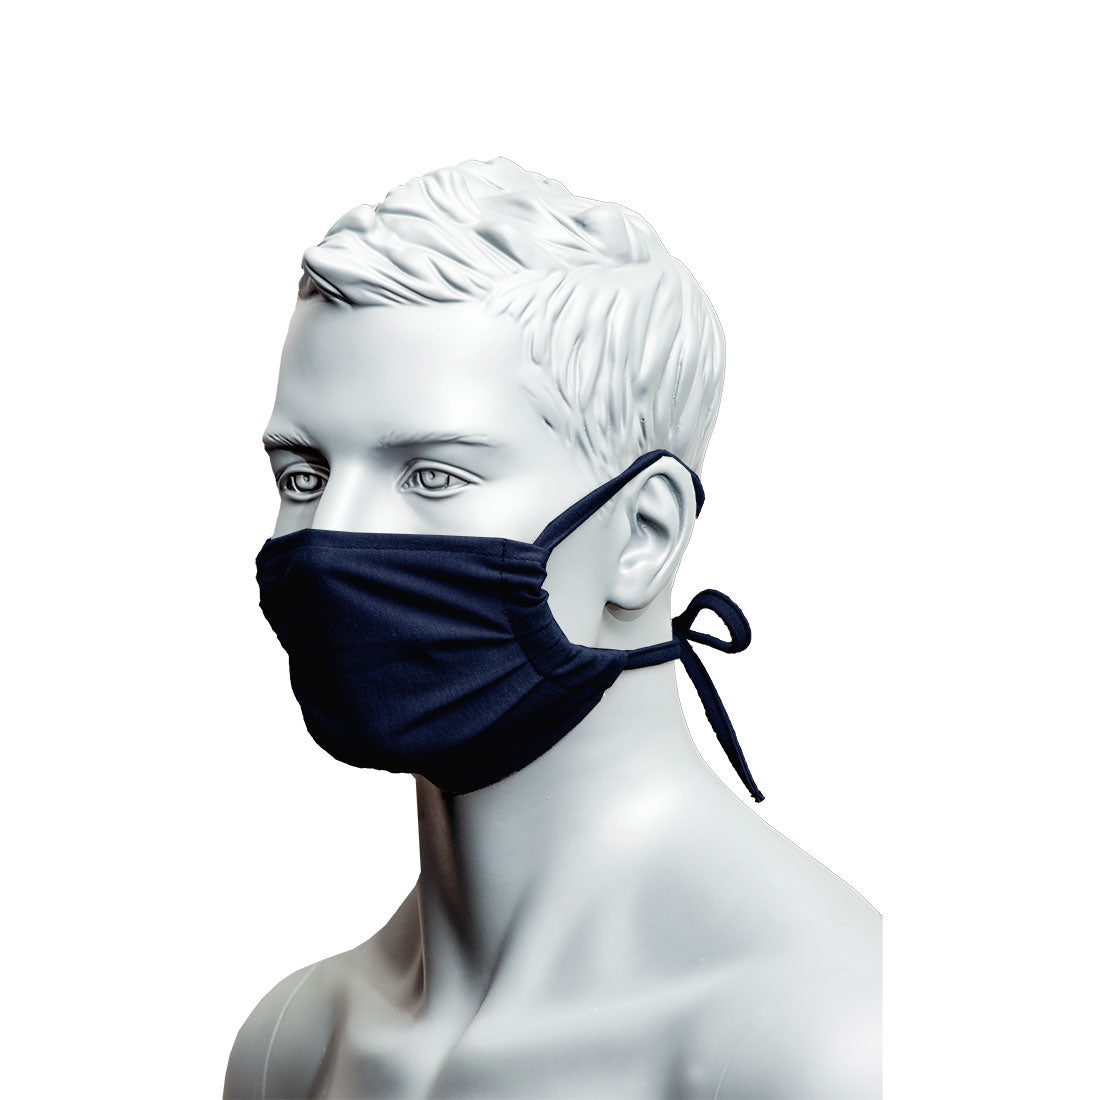 Portwest Flame Resistant Mask